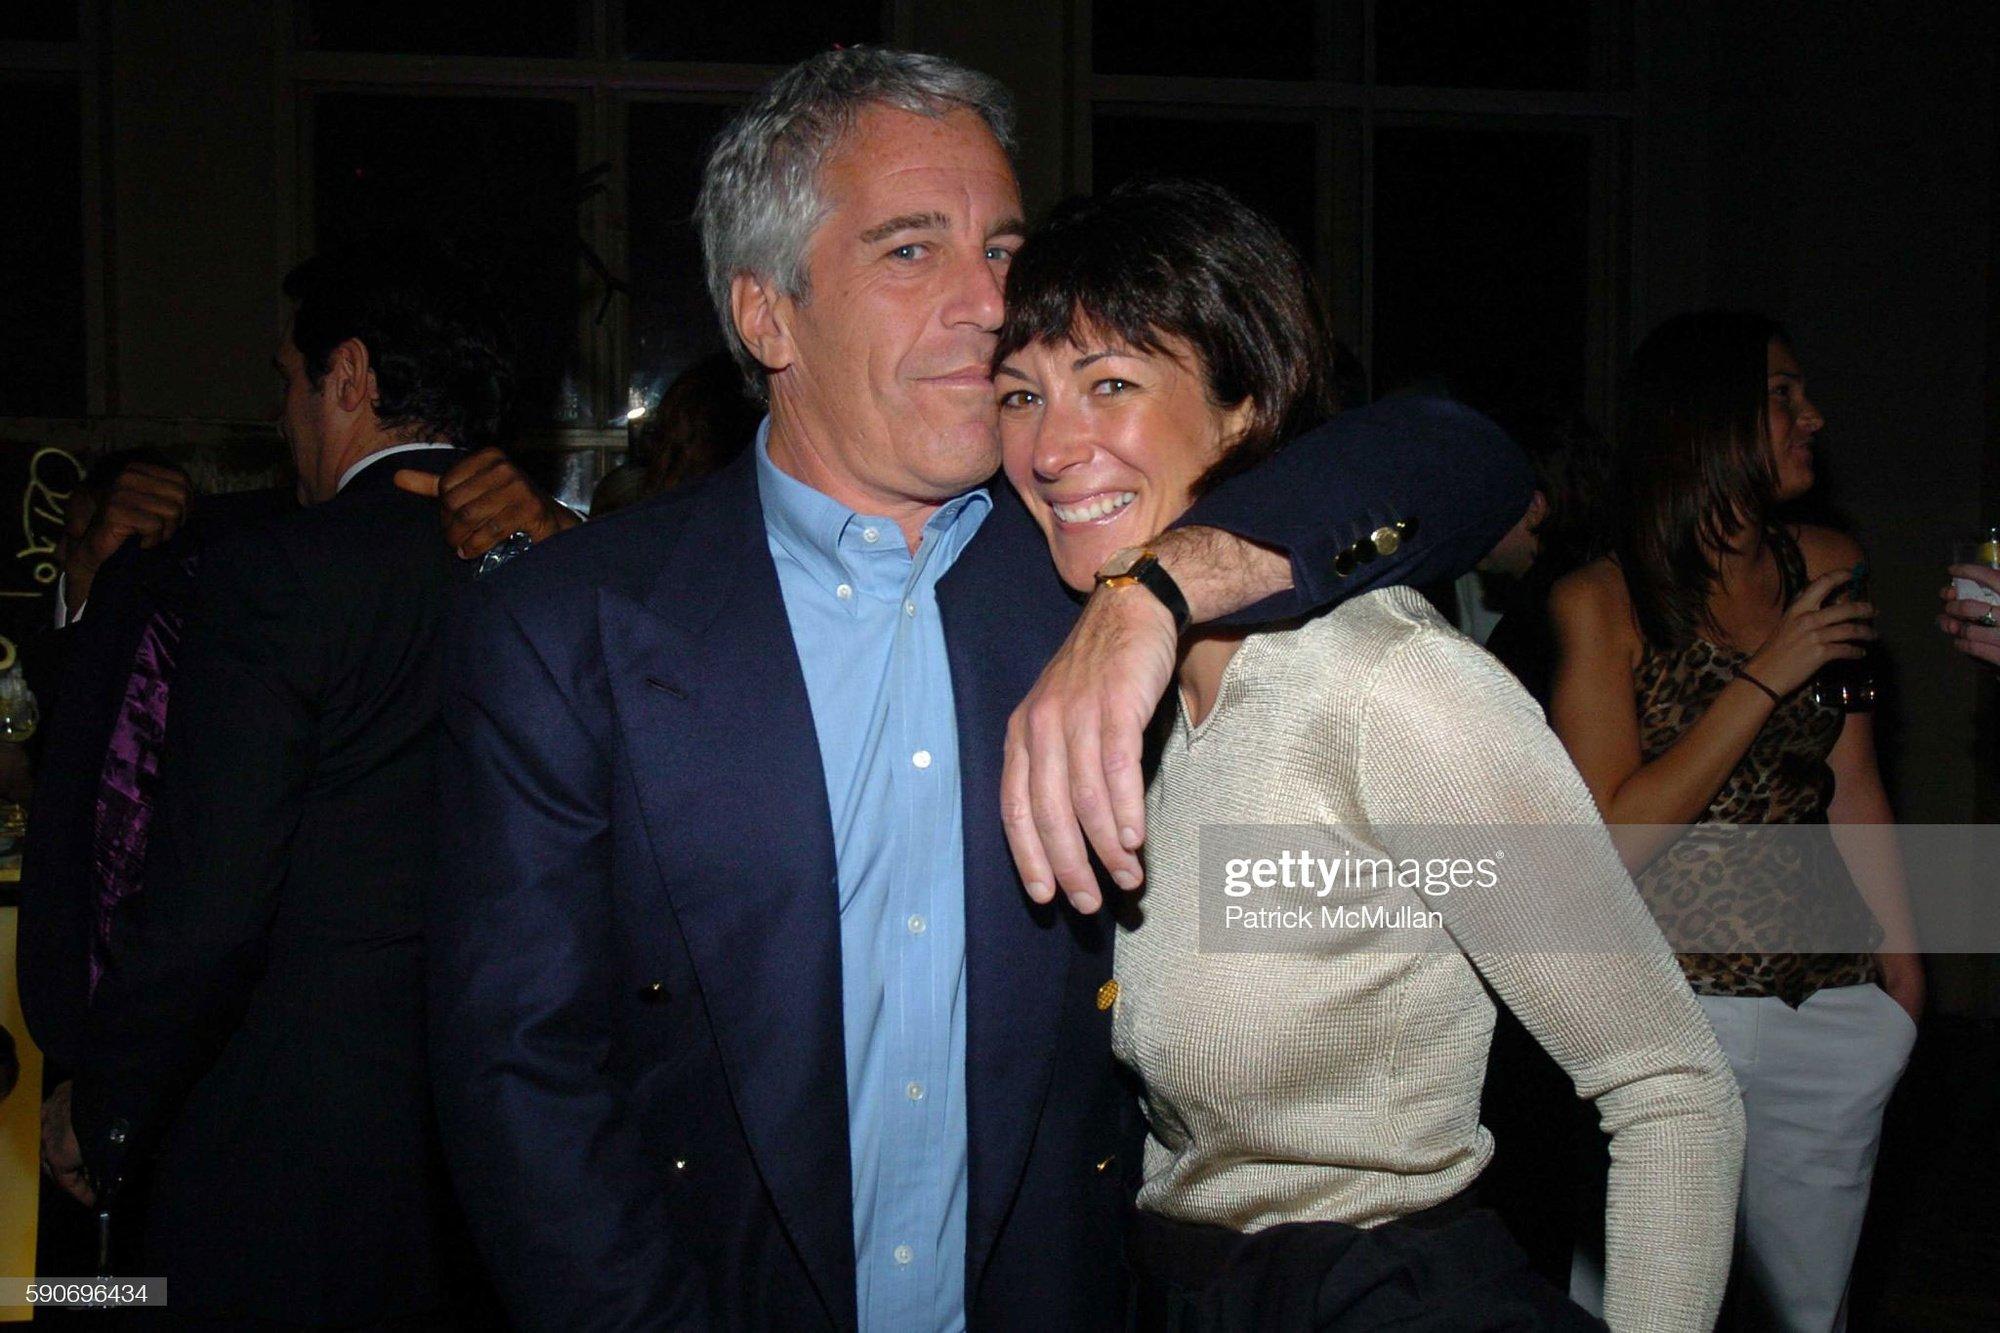 Jeffrey Epstein en Ghislaine Maxwell in New York in 2005